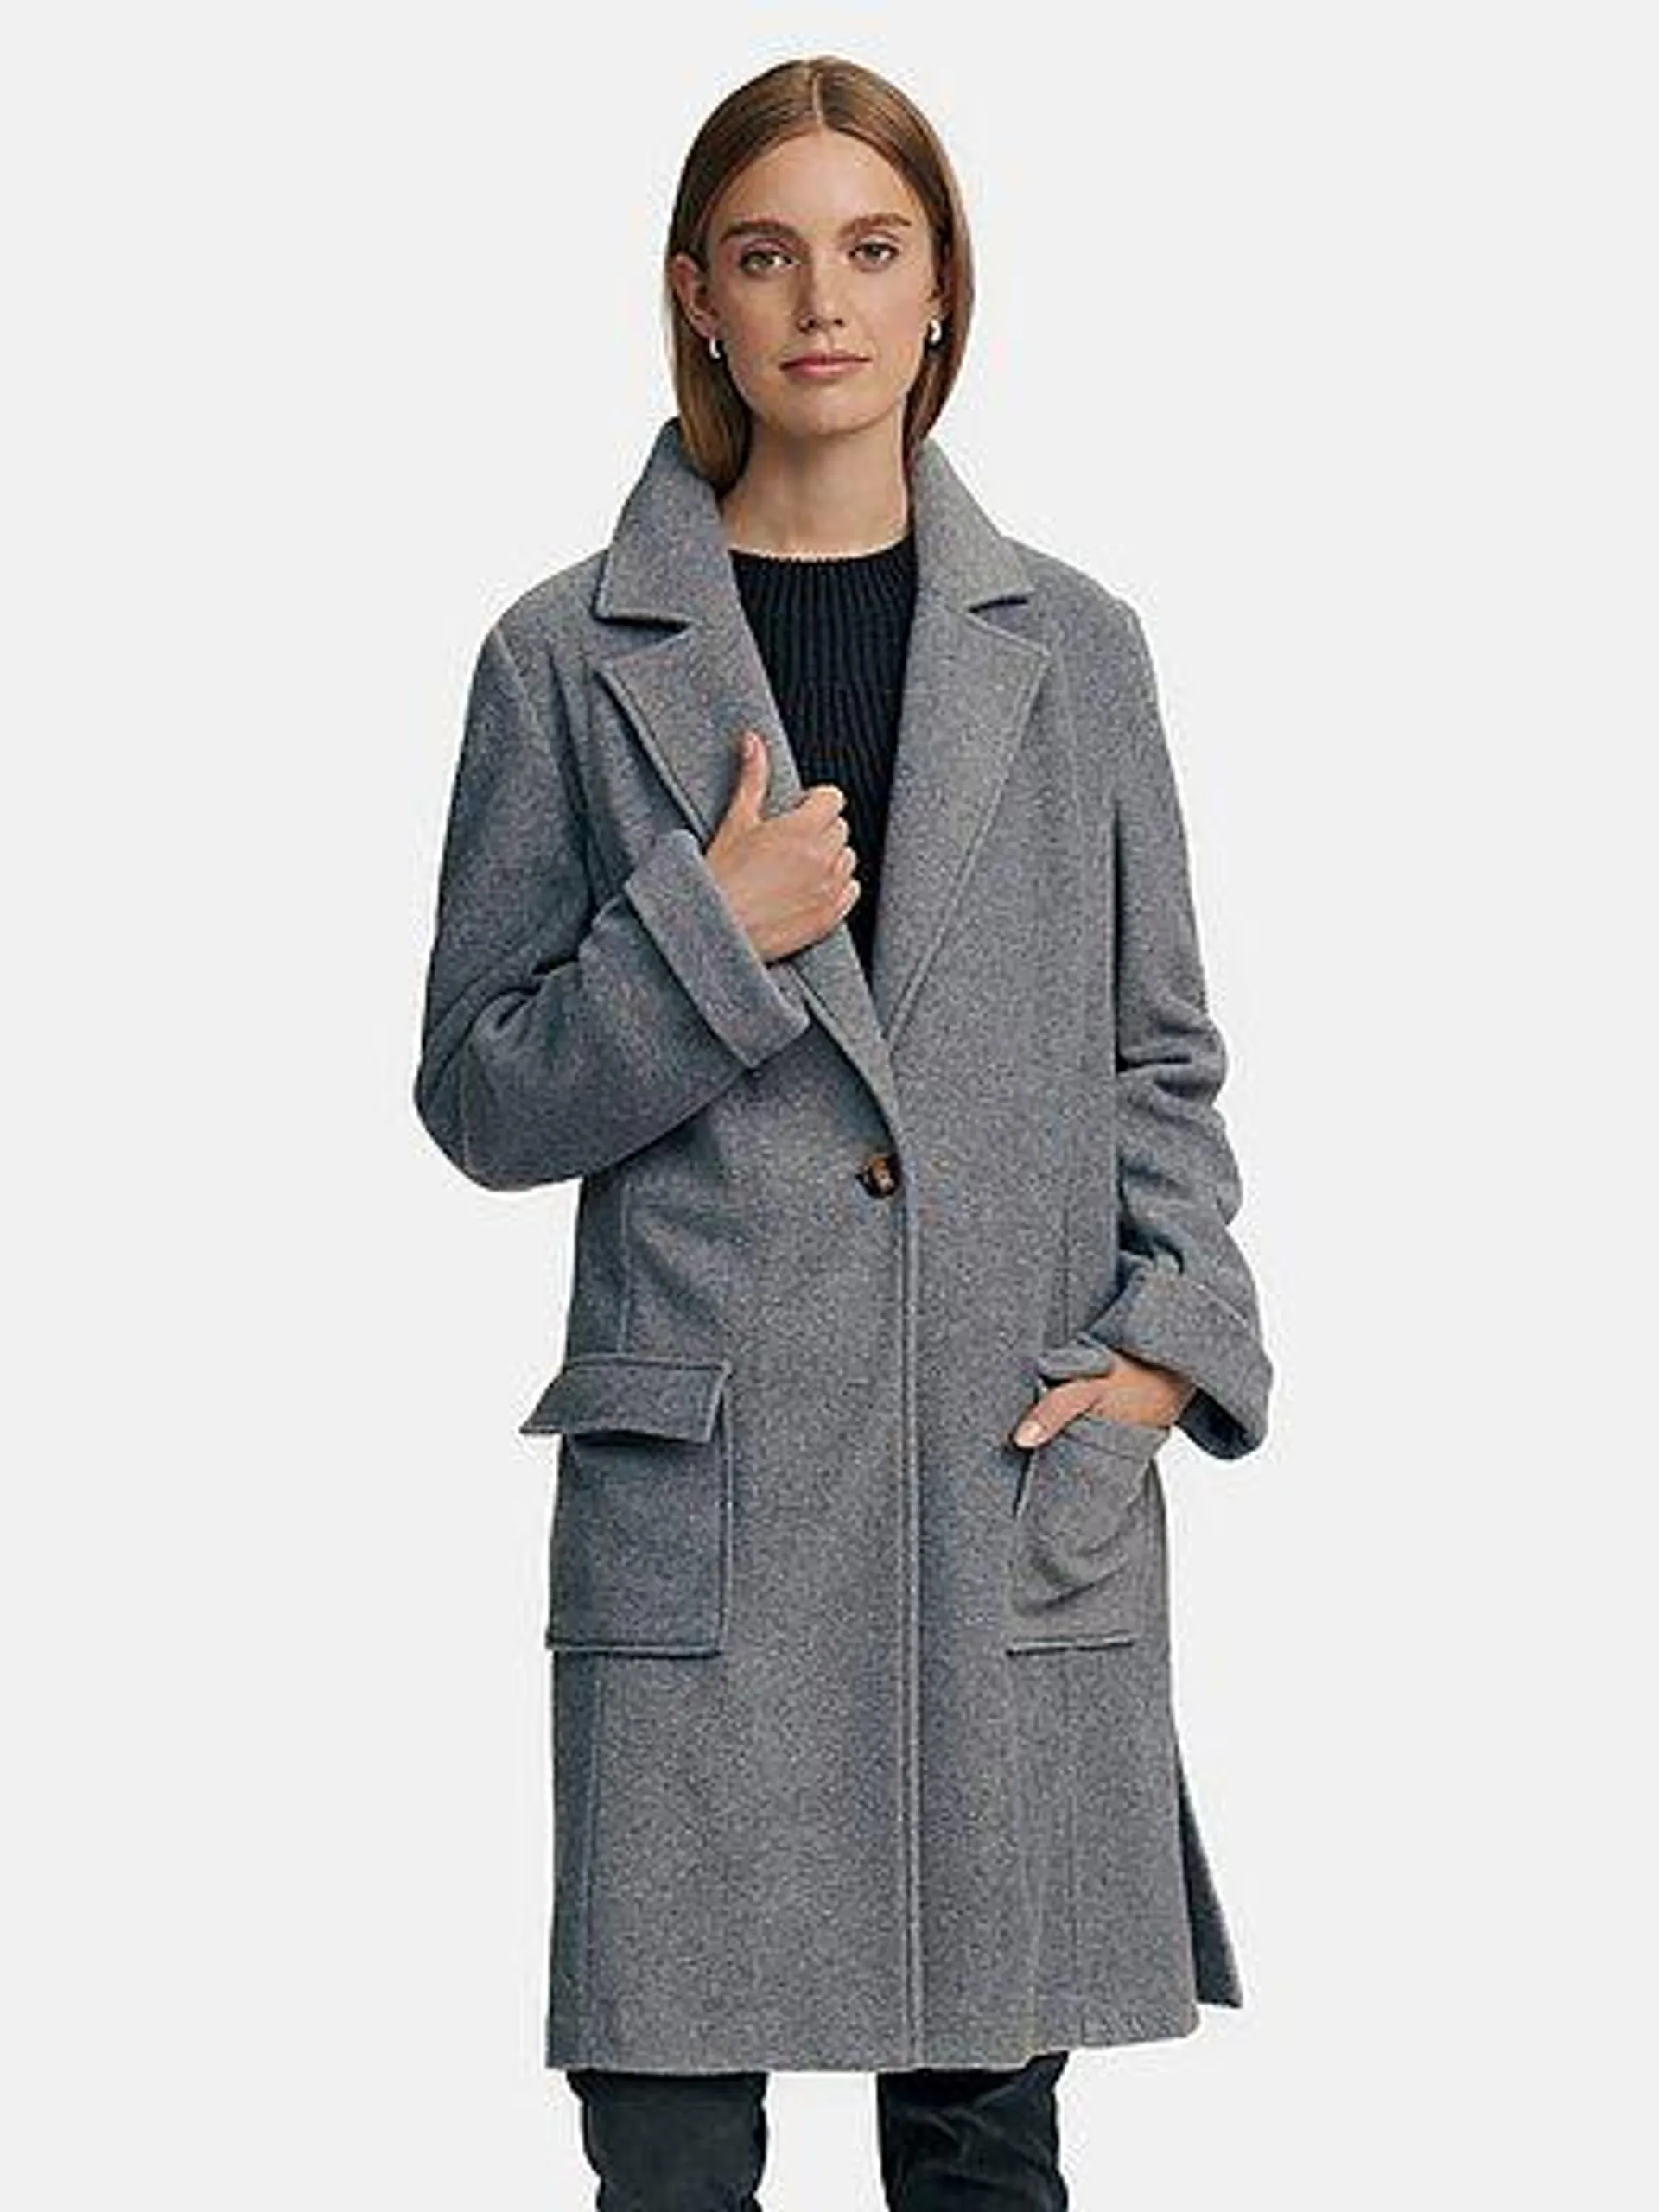 Fleece coat blazer style with lowered revers